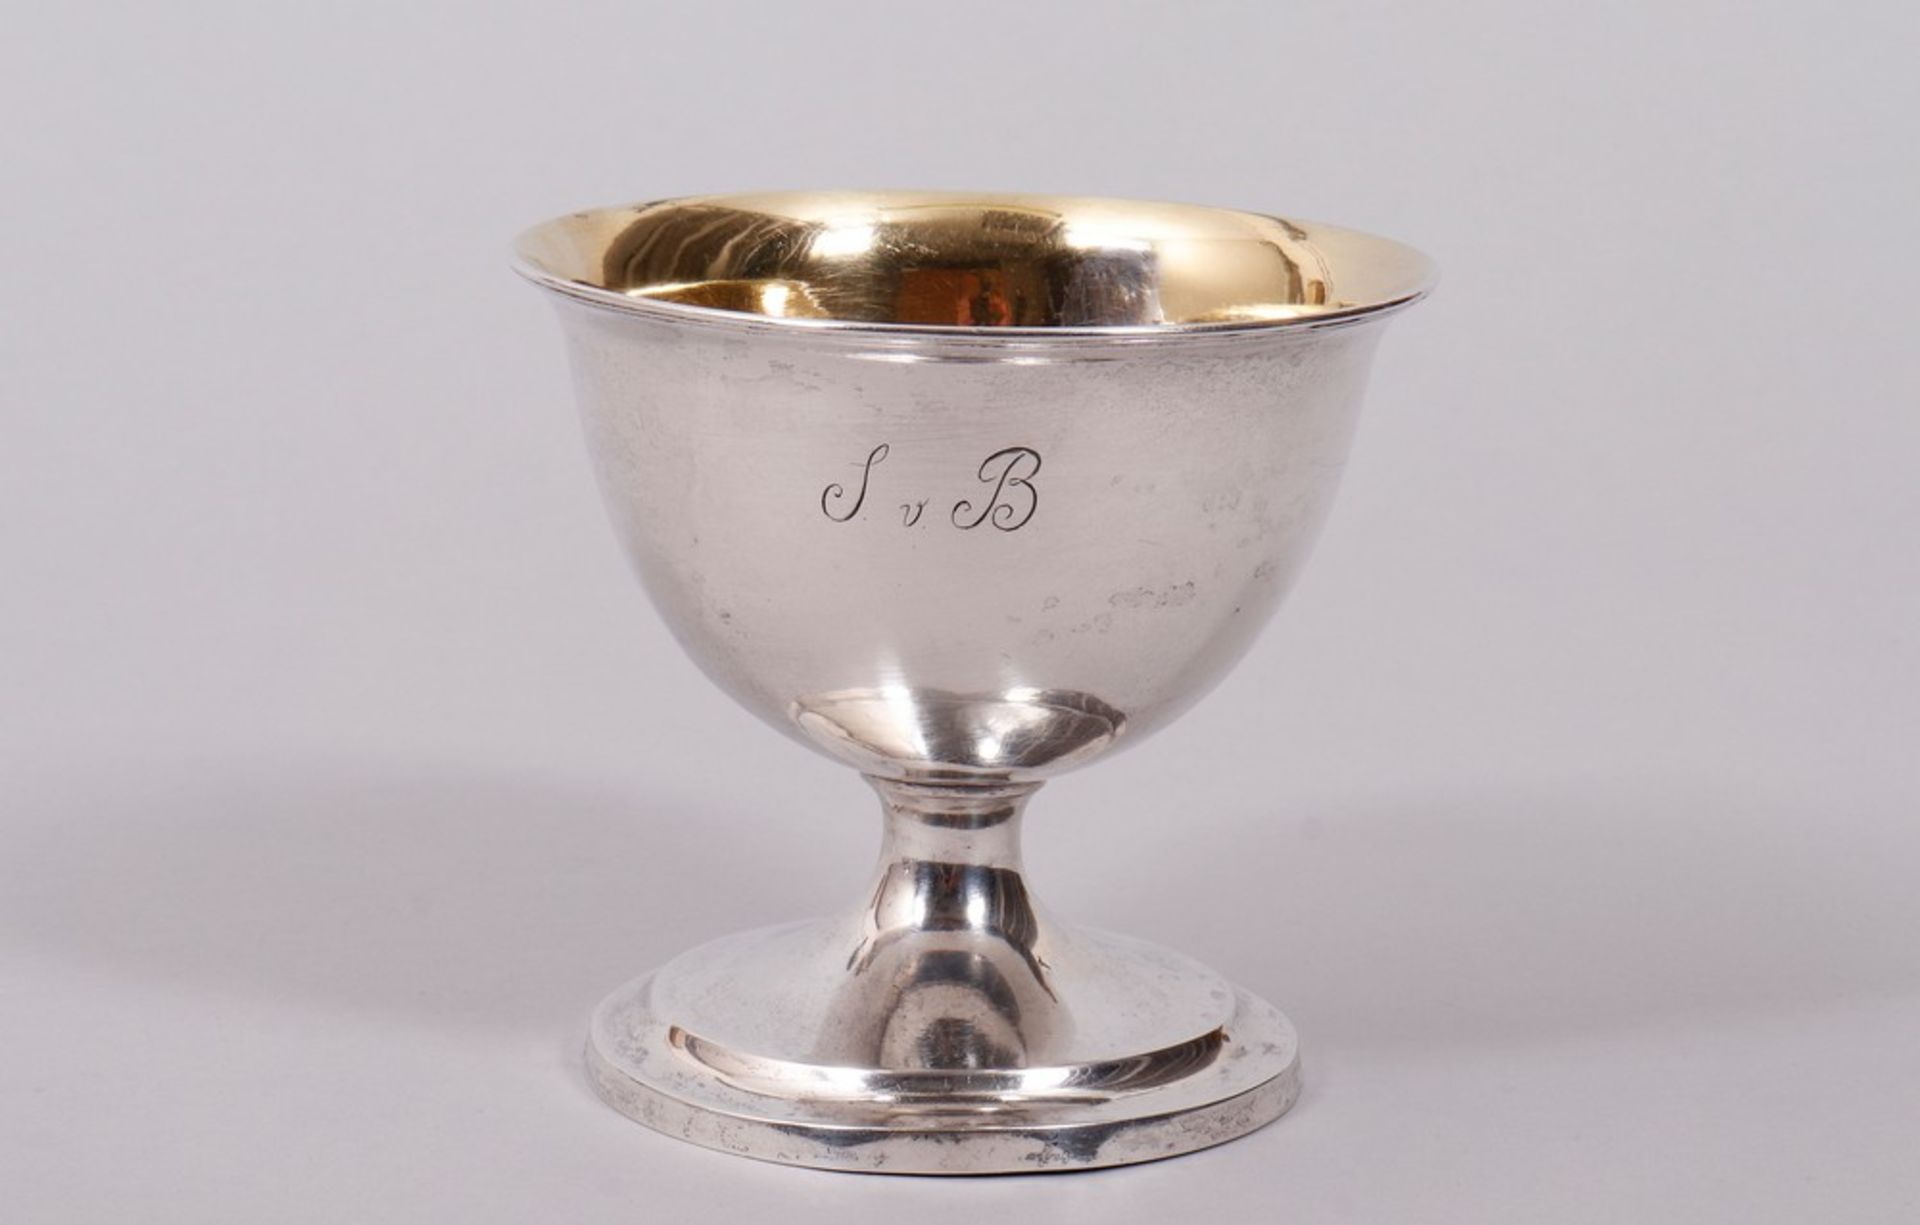 Footed bowl, silver, 13 Loth, Johann Martin Schott, Frankfurt a. M., c. 1820/30 - Image 2 of 4